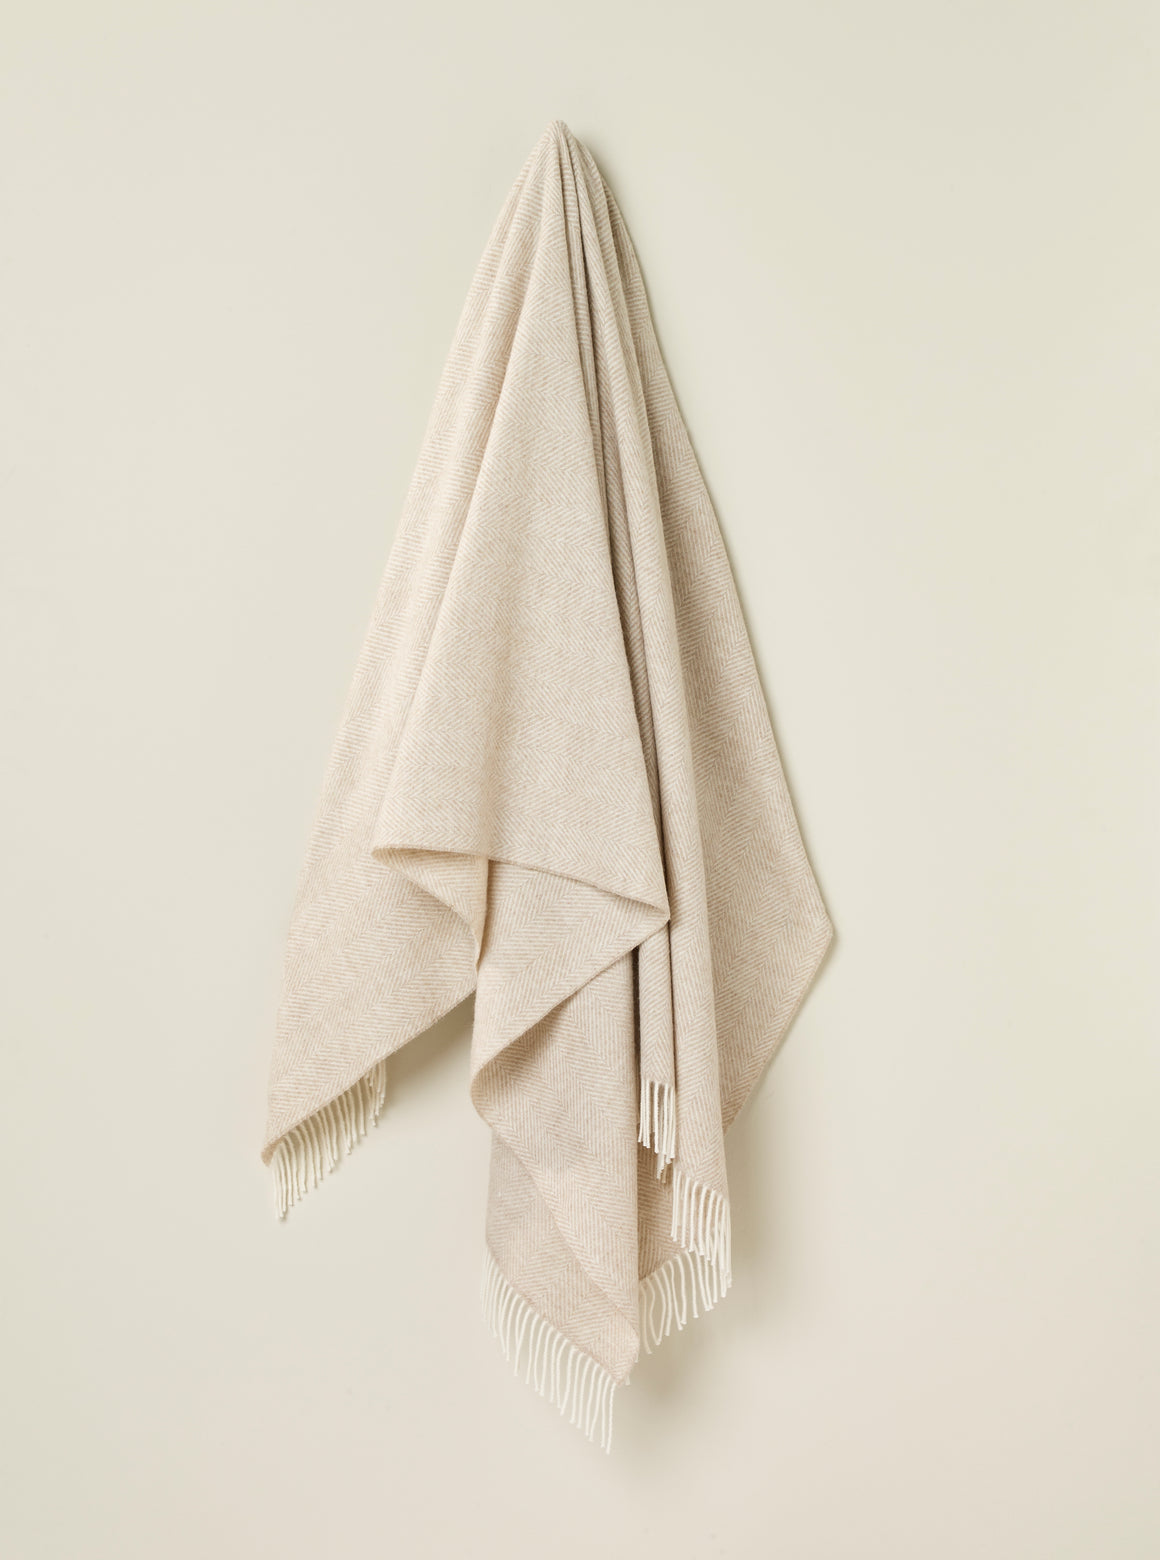 Merino Lambswool Throw Blanket - Herringbone - Beige, Made in England